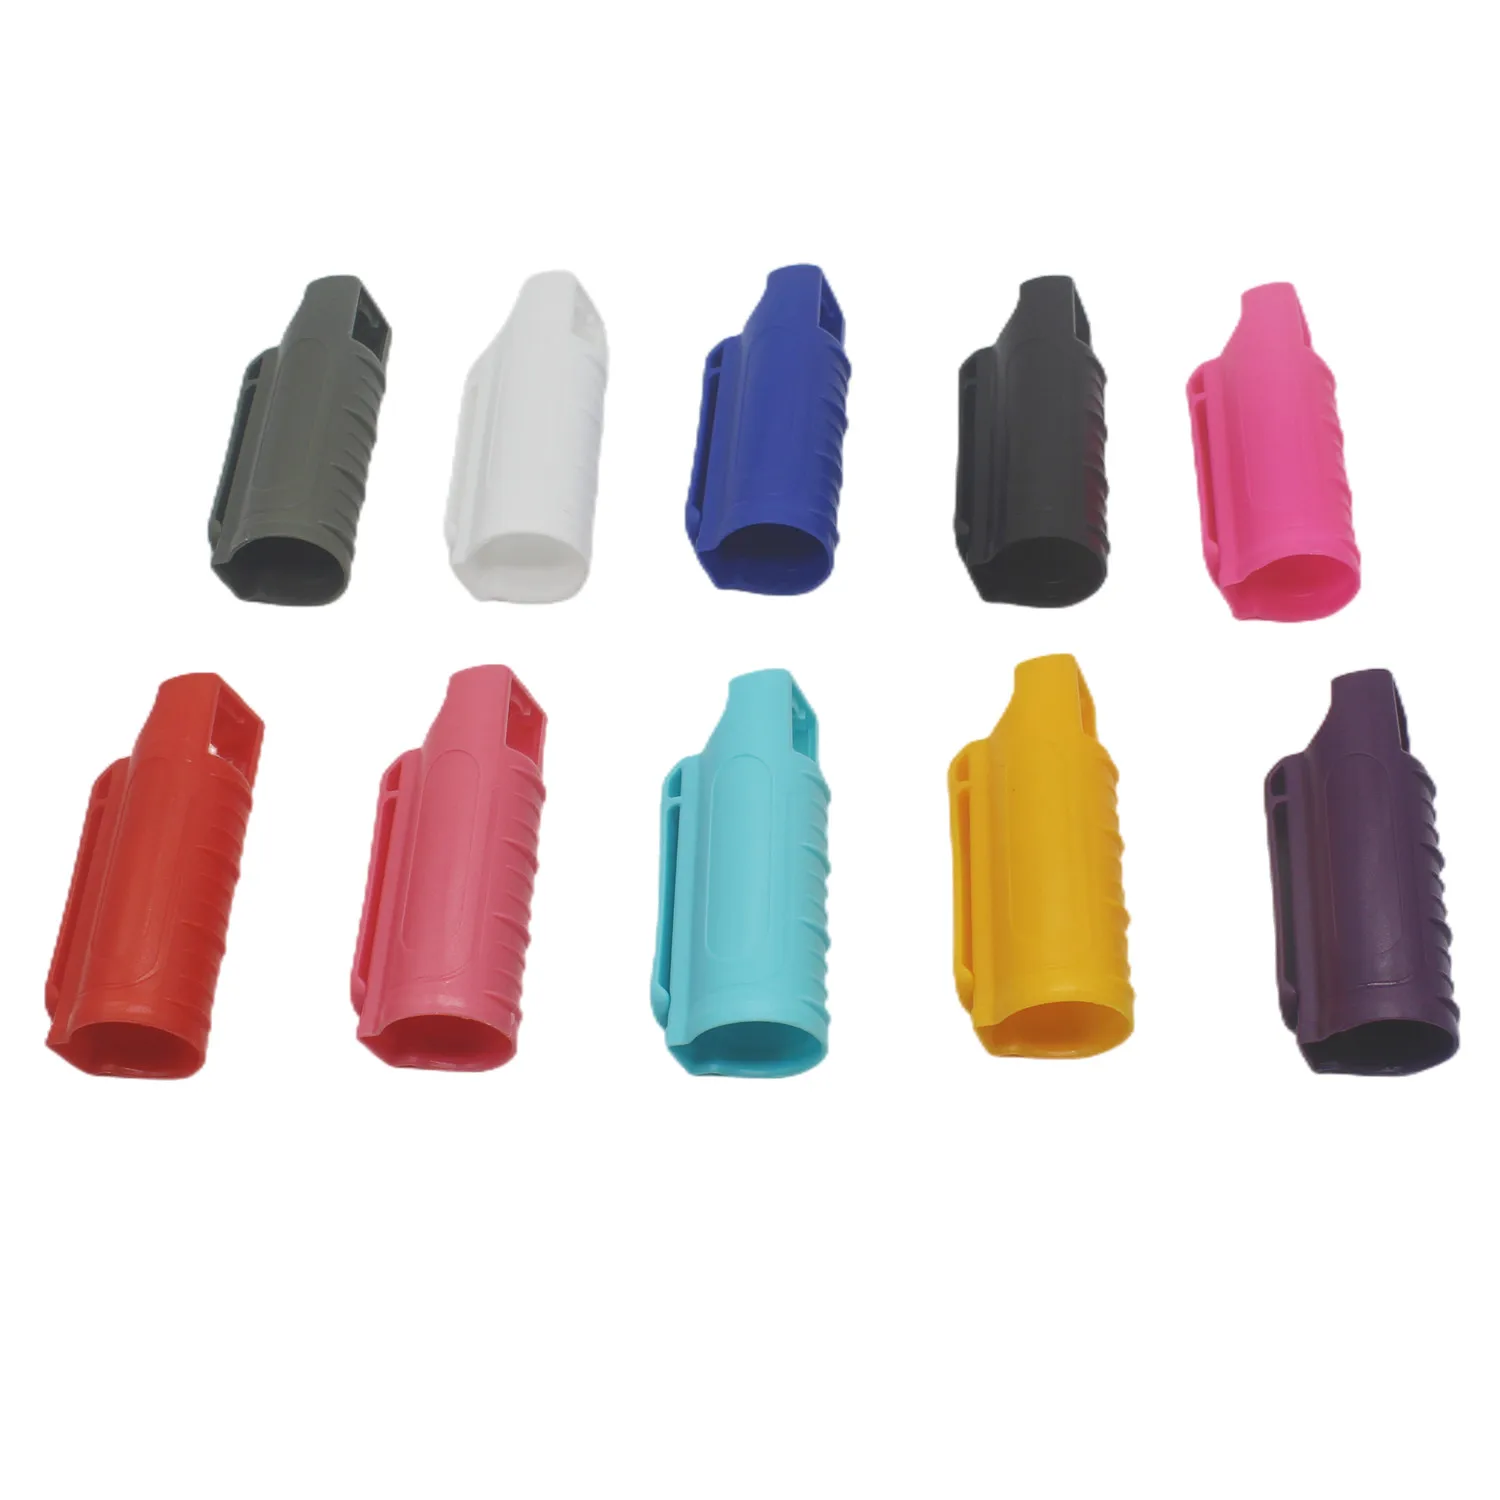 plastic spray shell self defense keychain set self defense supplies (1600642975964)